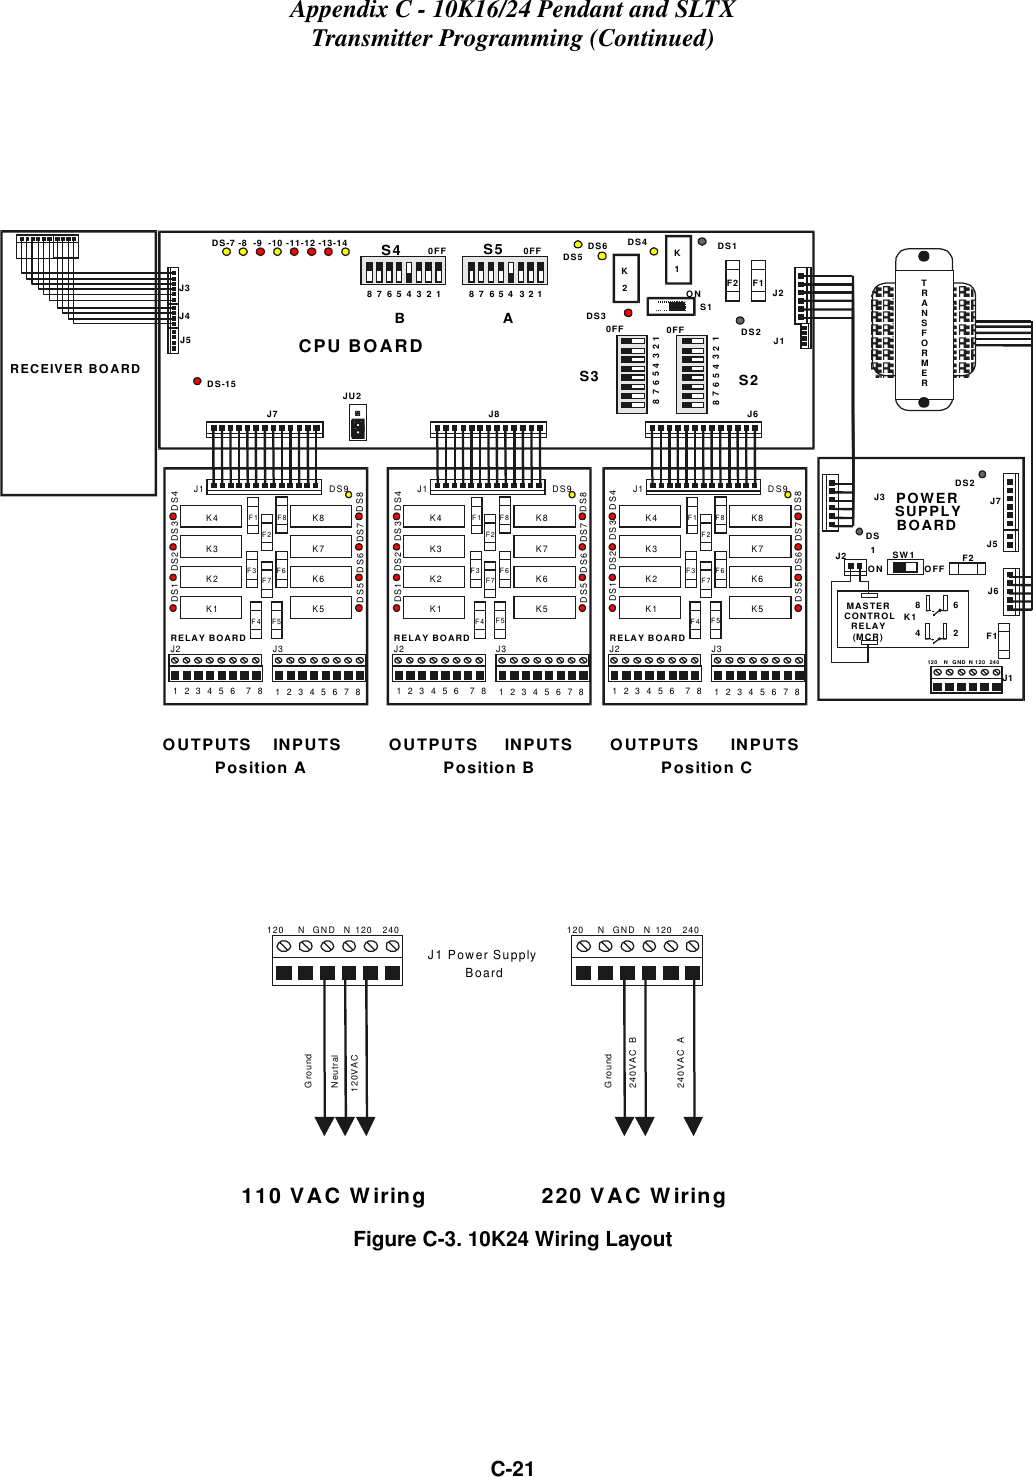 Appendix C - 10K16/24 Pendant and SLTXTransmitter Programming (Continued)C-21Figure C-3. 10K24 Wiring LayoutJ1 Power SupplyBoardNGNDN120 240120GroundNeutral120VACNGNDN120 240120Ground240VAC B240VAC A220 VAC Wiring110 VAC WiringJ2123456 78 12345678J3DS9DS1 DS2 DS3 DS4K1K2K3K4K5K6K7K8F1F2F3F4 F5F6F7F8DS5 DS6 DS7 DS8J1RELAY BOARDJ2123456 78 12345678J3DS9DS1 DS2 DS3 DS4K1K2K3K4K5K6K7K8F1F2F3F4 F5F6F7F8DS5 DS6 DS7 DS8J1RELAY BOARDJ5F2DS2DS1SW1ON OFFJ2J3 J7POWERSUPPLYBOARDRECEIVER BOARDTRANSFORMERJ3J4DS-15DS2K1S1DS5DS4 DS1DS3J7 J8 J68765432187654 3210FF 0FFS3 S20FF87654 321S587654321S40FFDS-7 -8 -9 -10 -11-12 -13-14J5JU2J2J1K2DS6ONCPU BOARDF1J6J1NGNDN120 2401202864MASTERCONTROLRELAY(MCR)K1OUTPUTS INPUTS OUTPUTS INPUTS OUTPUTS INPUTSPosition A Position B Position CBAF2 F1J2123456 78 12345678J3DS9DS1 DS2 DS3 DS4K1K2K3K4K5K6K7K8F1F2F3F4 F5F6F7F8DS5 DS6 DS7 DS8J1RELAY BOARD